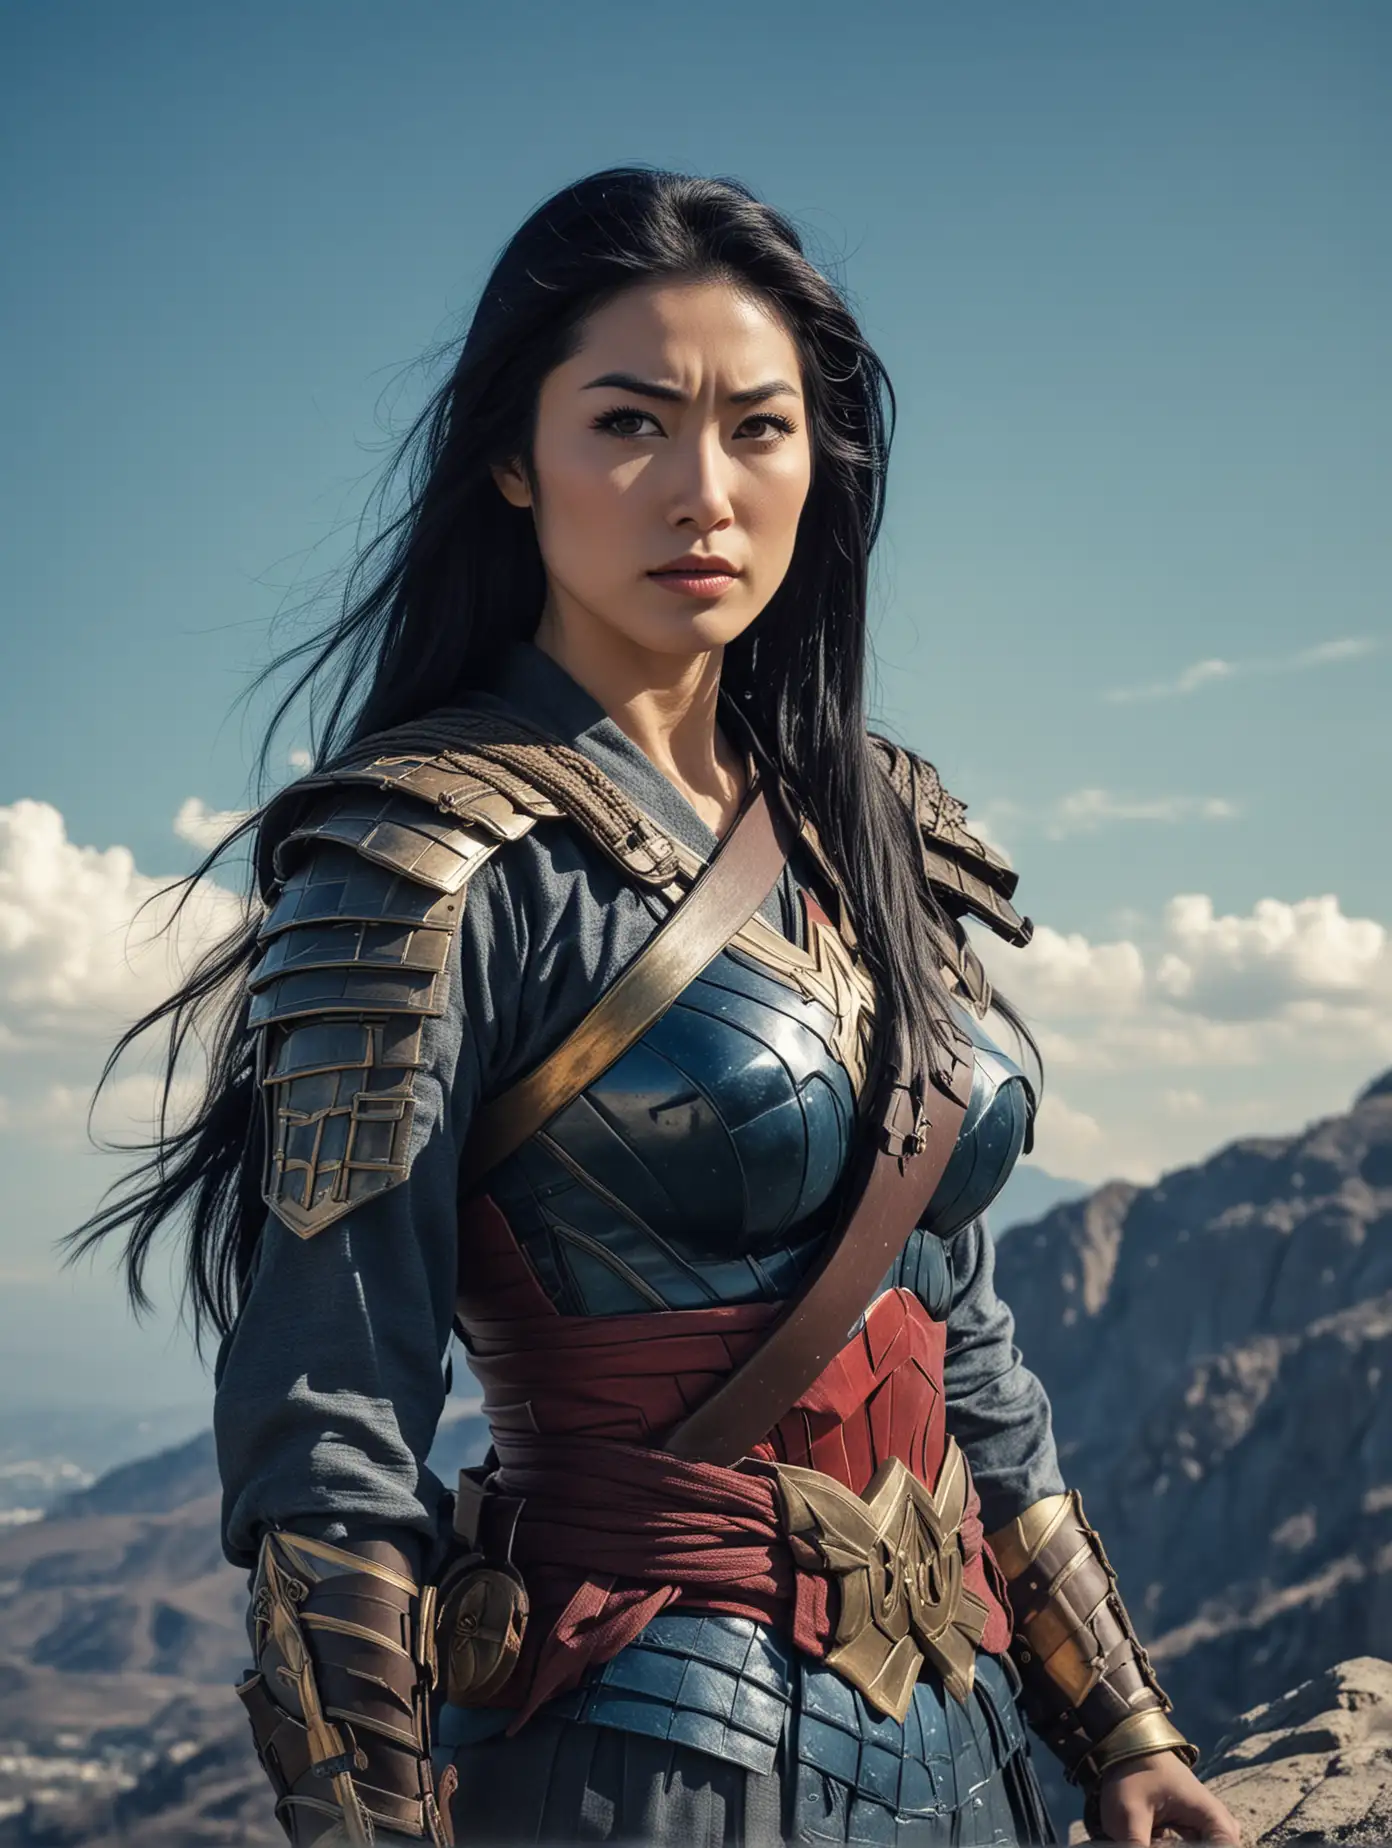 Heroic Samurai Woman in Wonder Woman Attire on Mountain Top